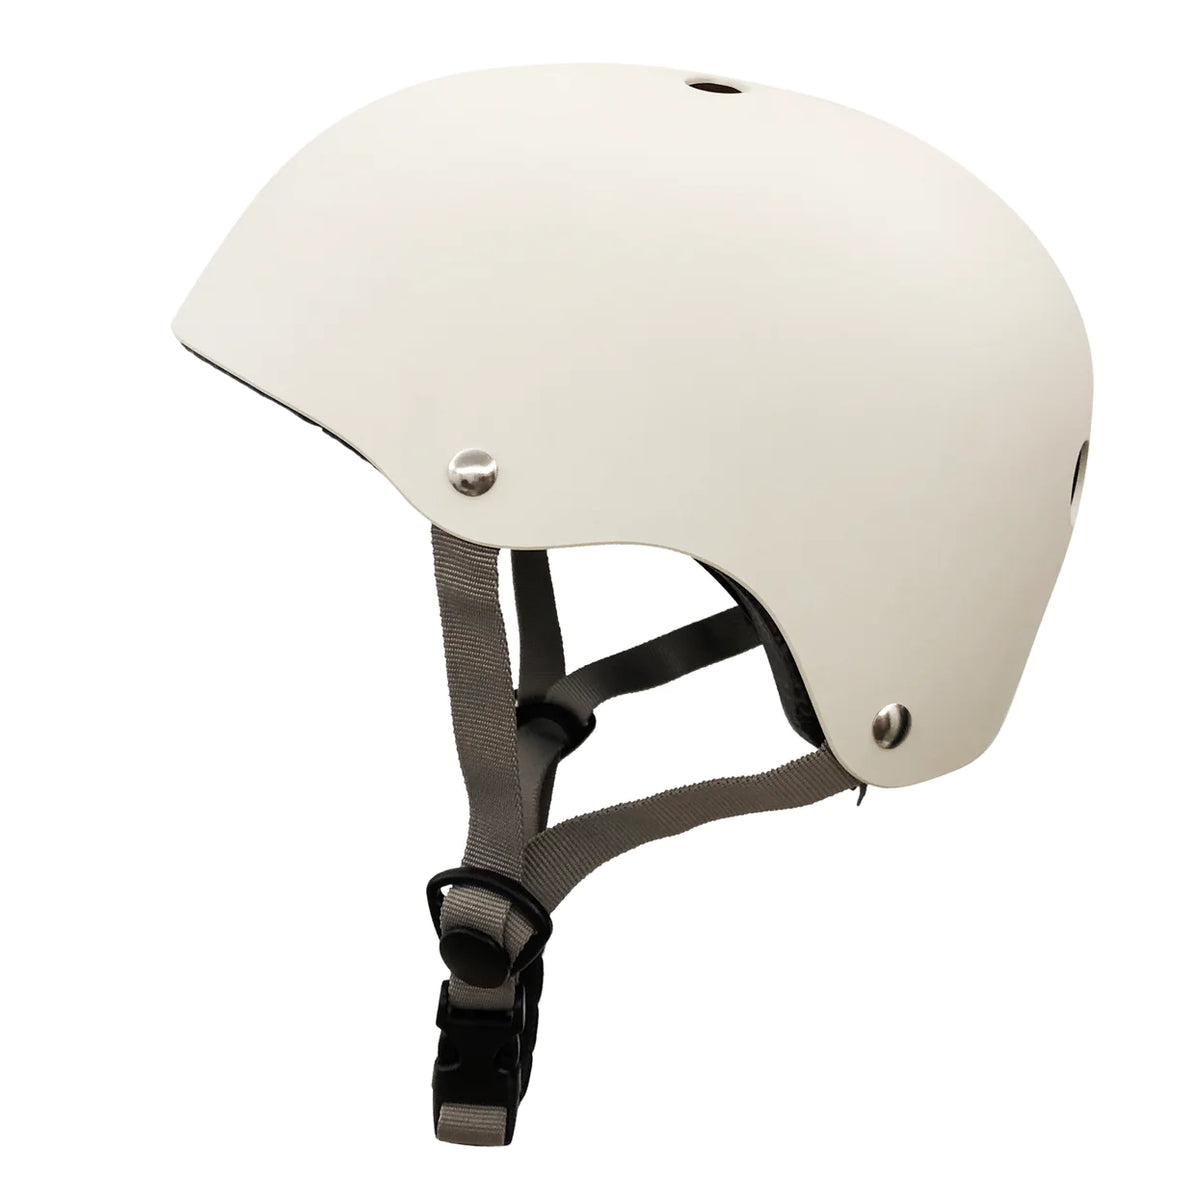 Ivory White Balance Bike with helmet